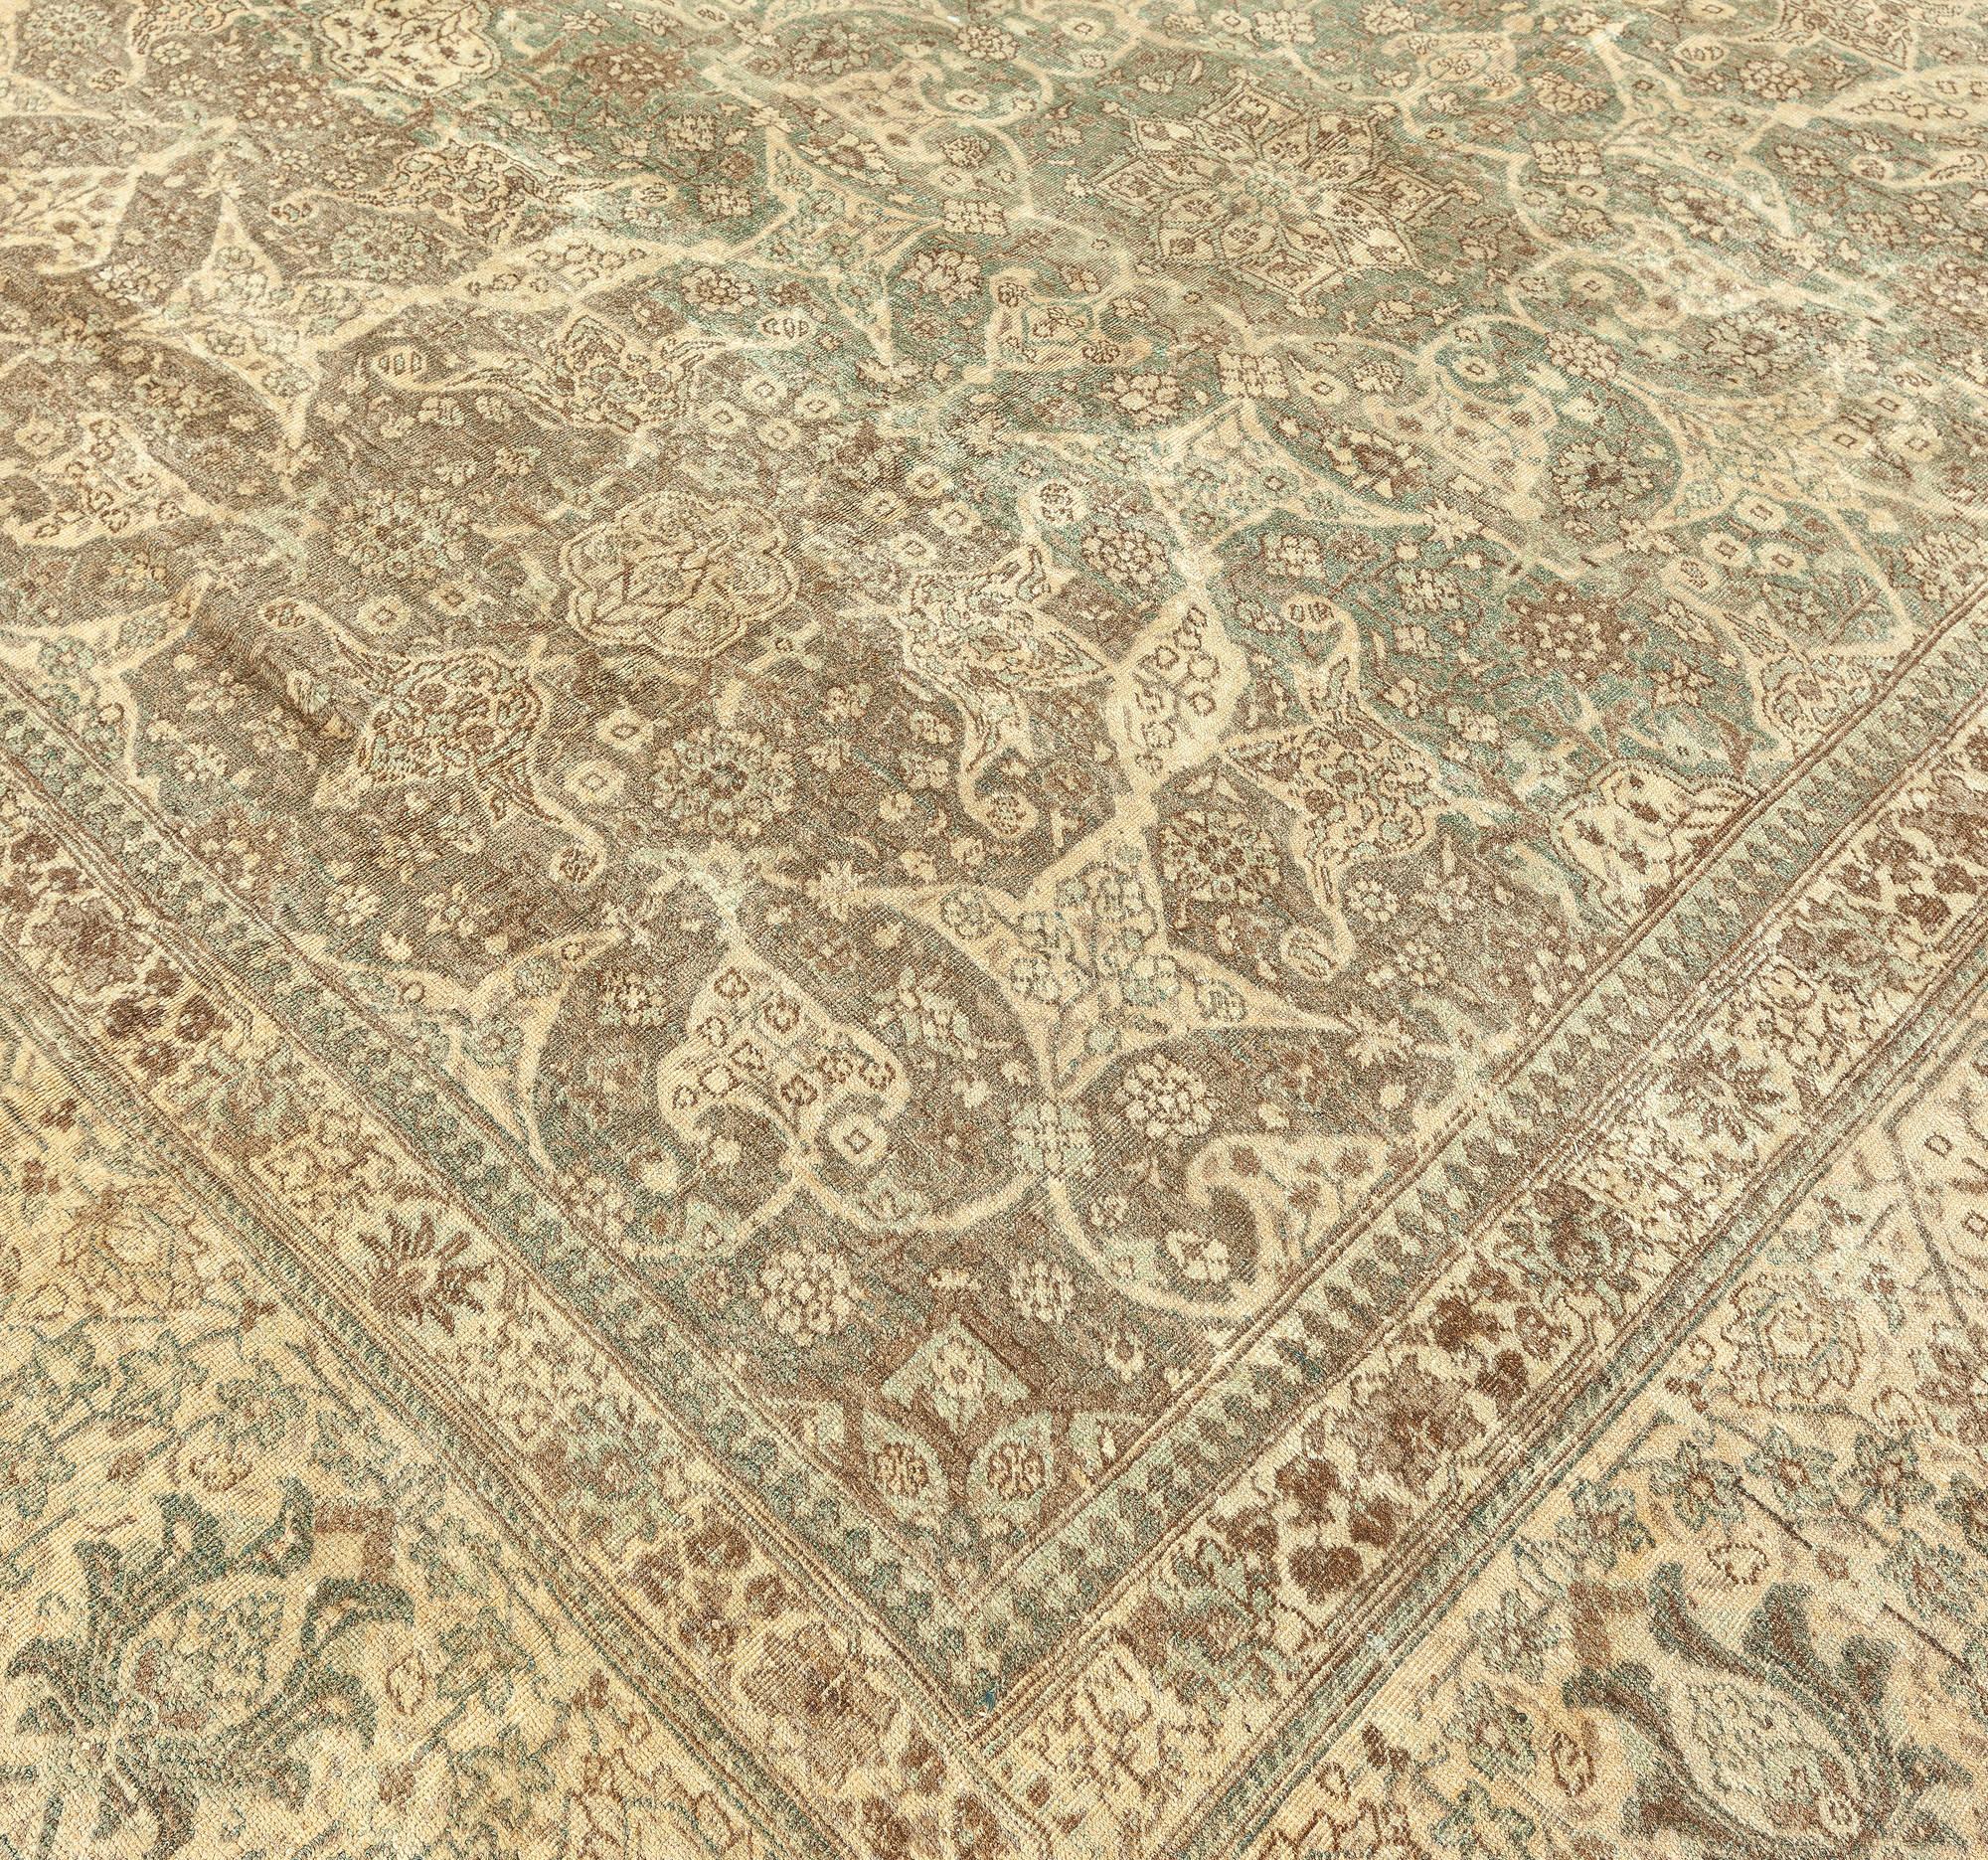 Authentic 19th Century Persian Tabriz botanic carpet
Size: 10'10